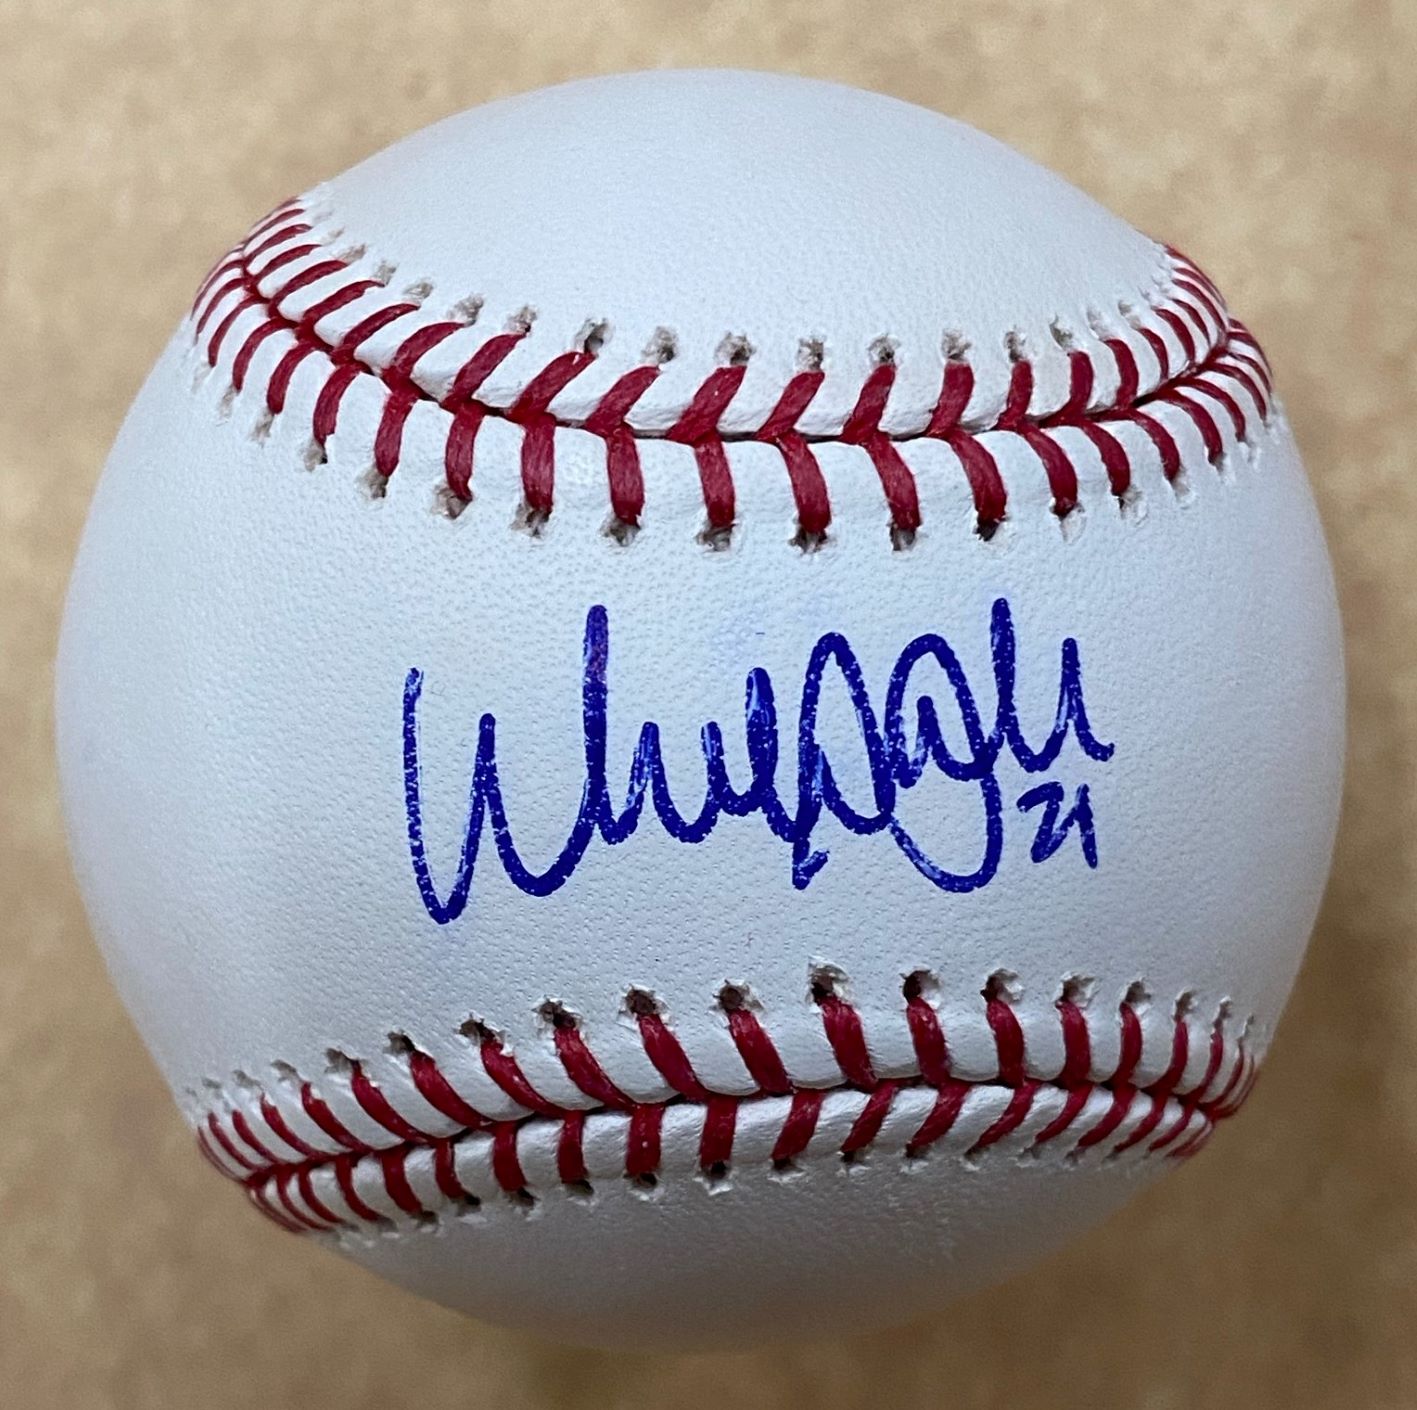 Walker Buehler Signed Autographed Baseball Glove Beckett Authenticity